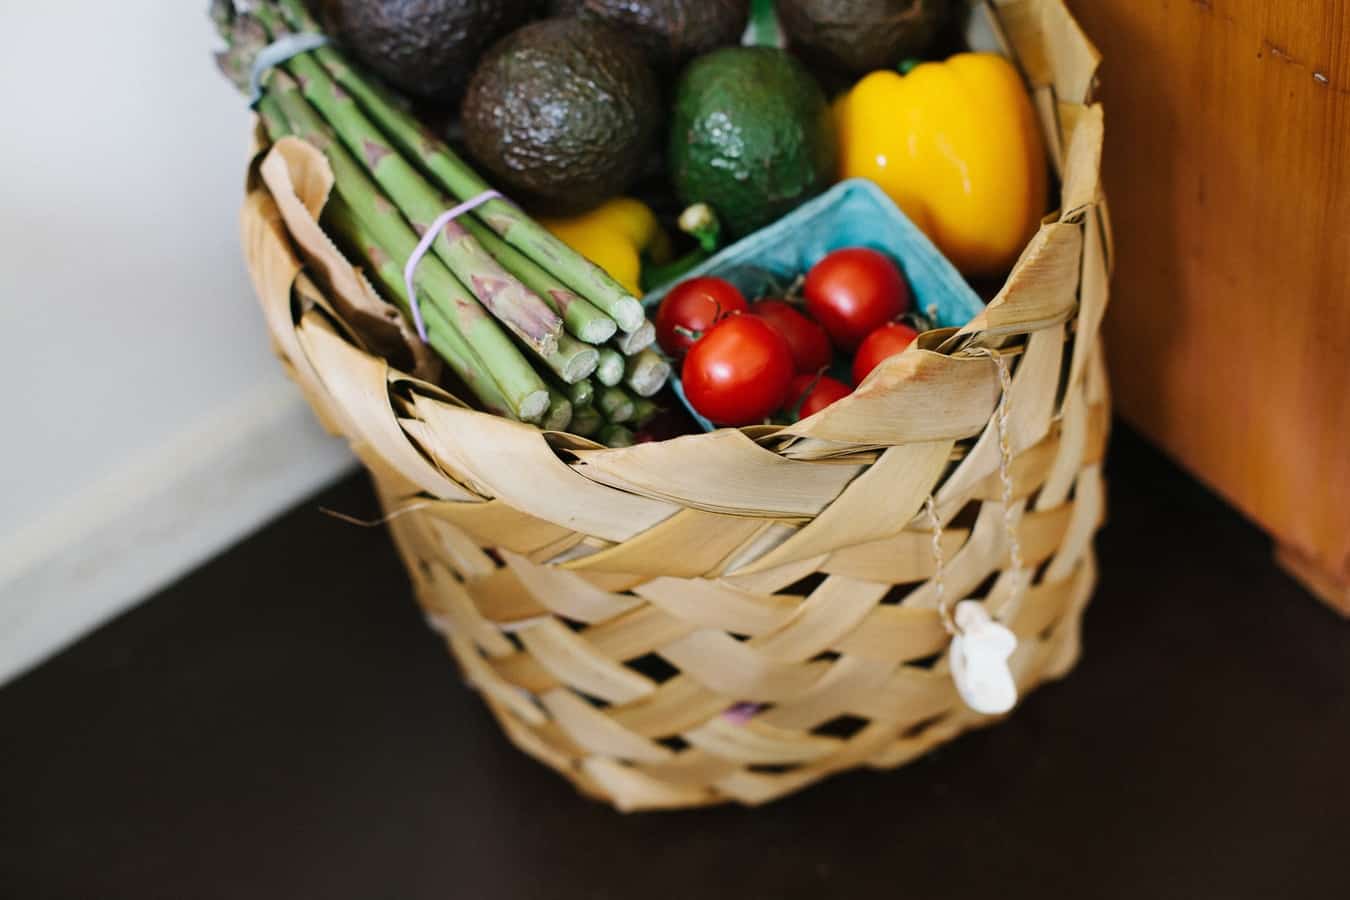 food-produce-vegetable-fresh-basket-groceries-2019-pxhere.com_